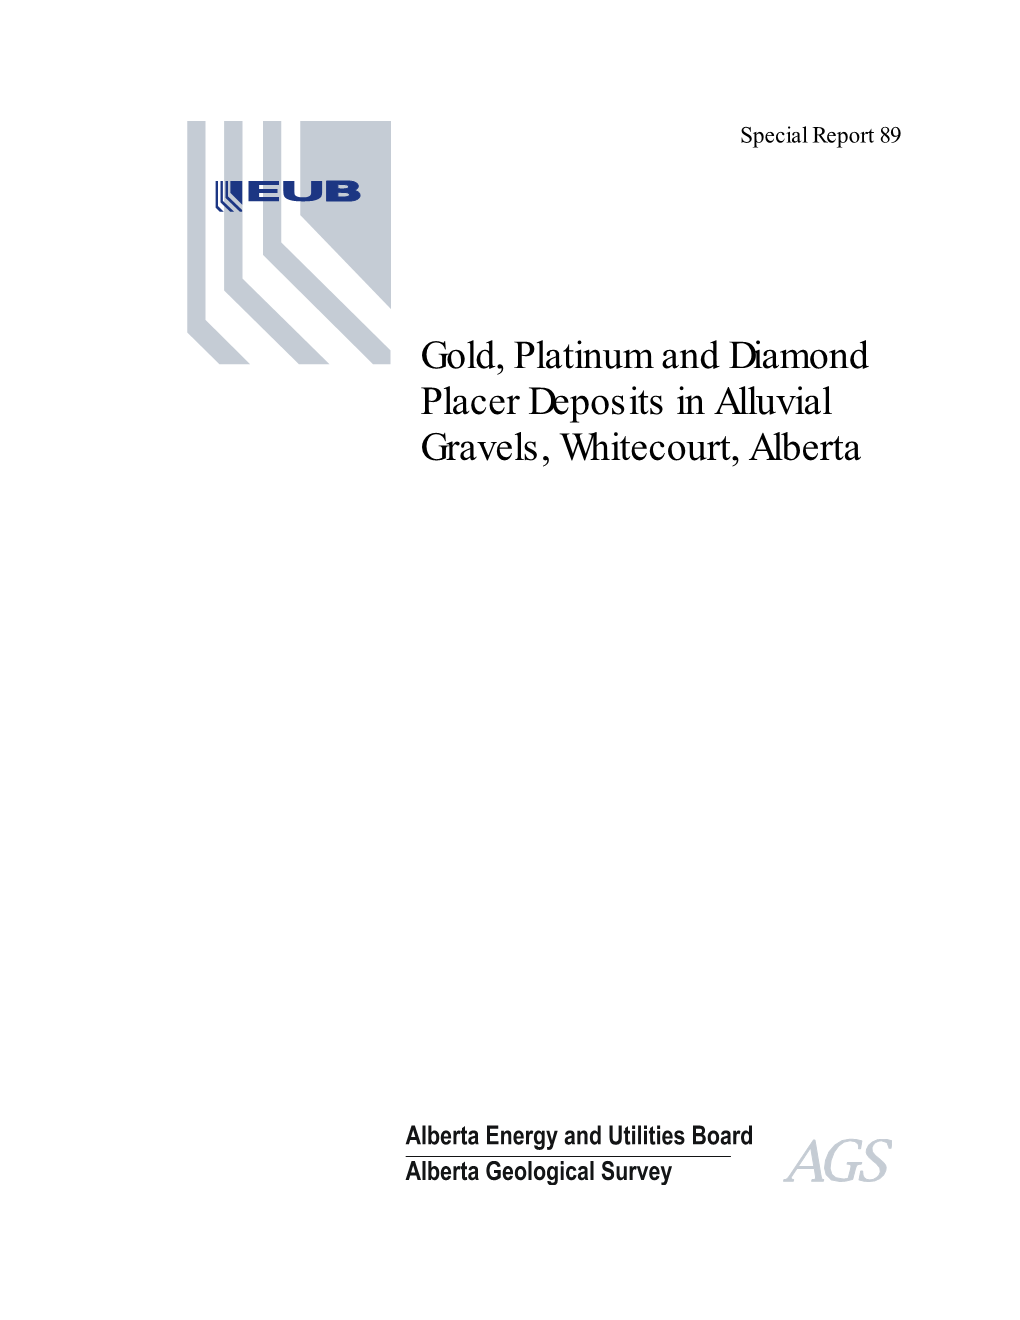 Gold, Platinum and Diamond Placer Deposits in Alluvial Gravels, Whitecourt, Alberta Special Report 89